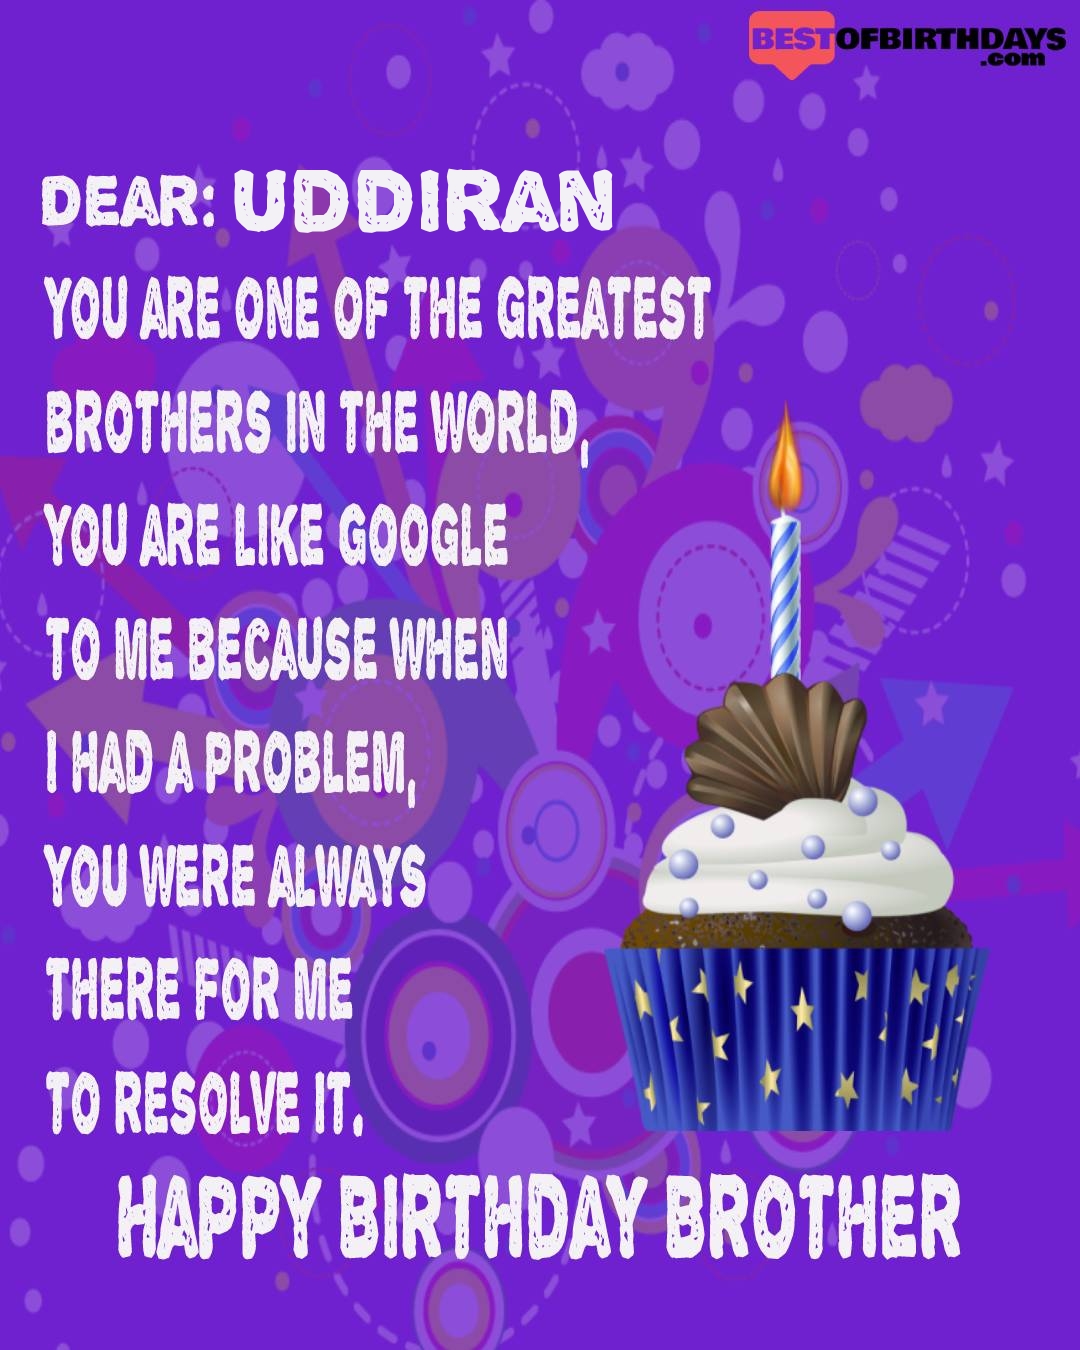 Happy birthday uddiran bhai brother bro